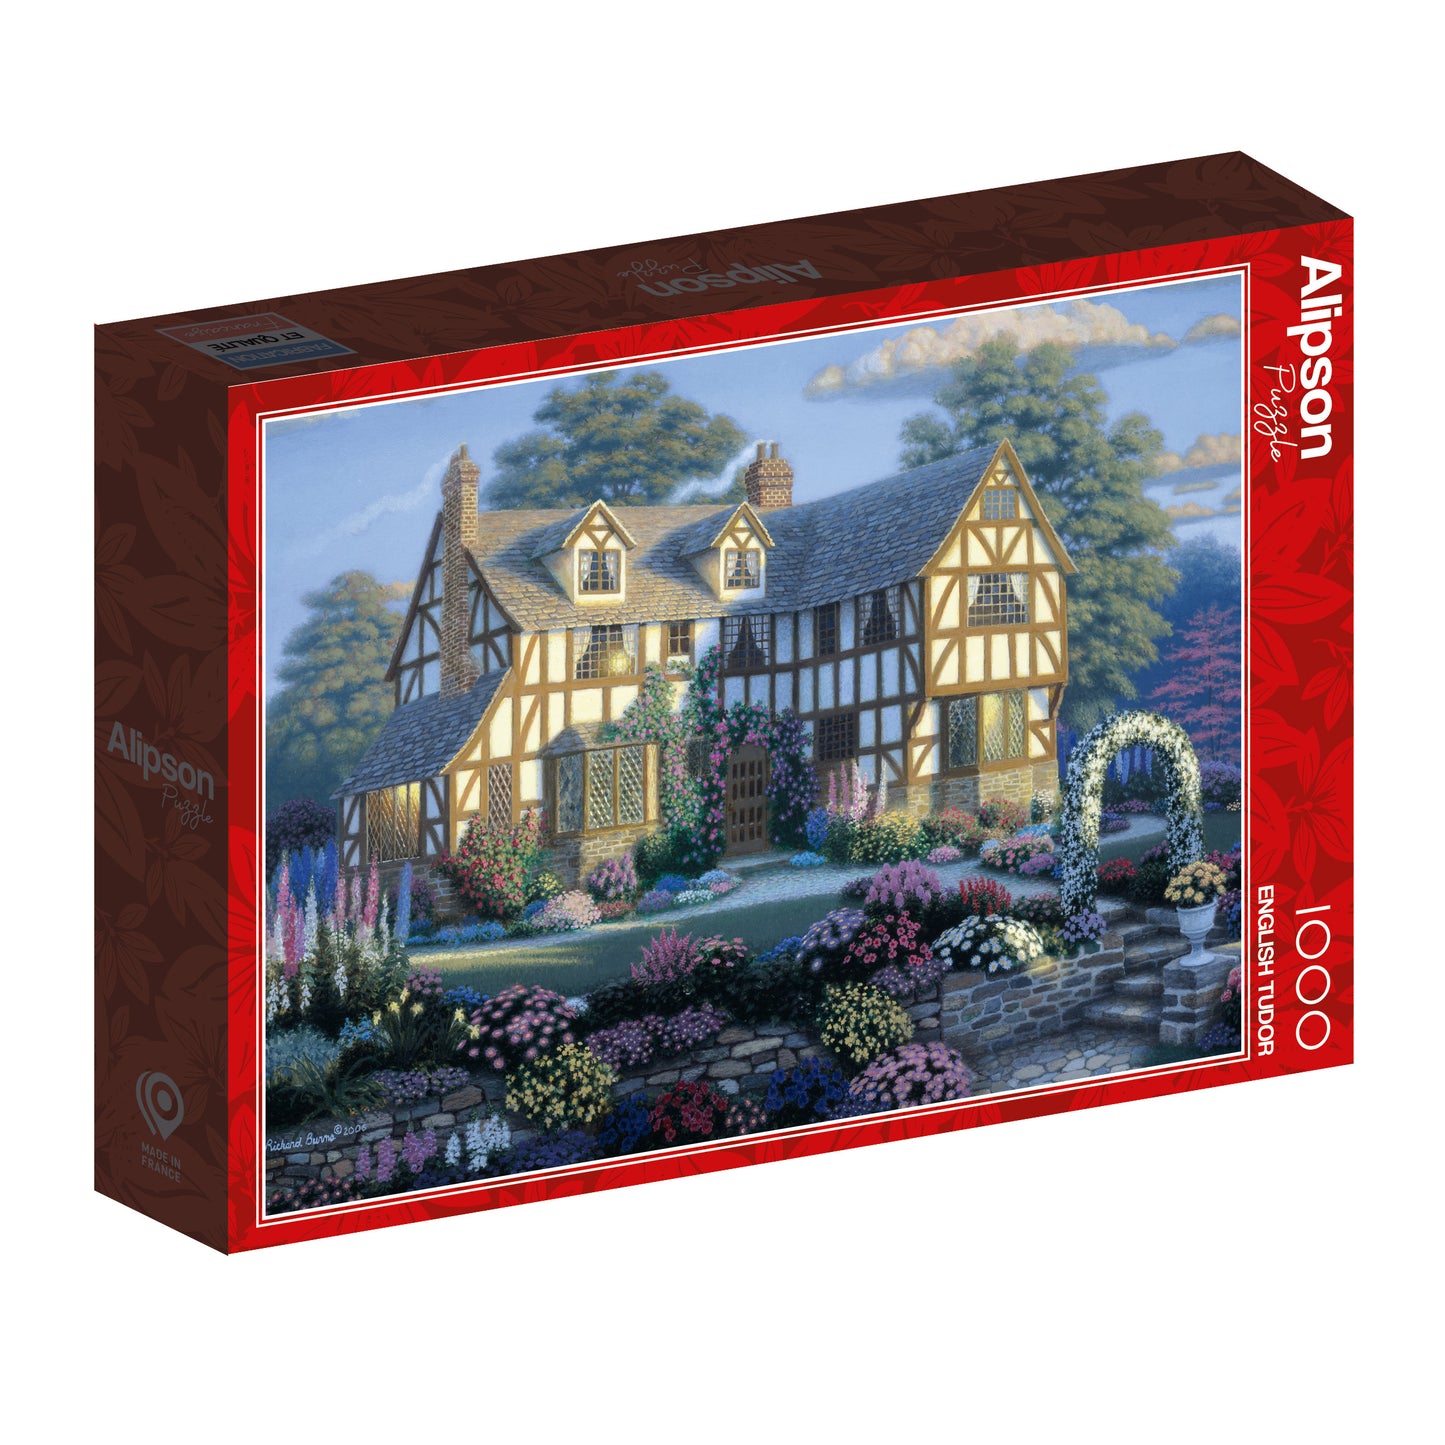 Alipson - English Tudor - 1000 Piece Jigsaw Puzzle